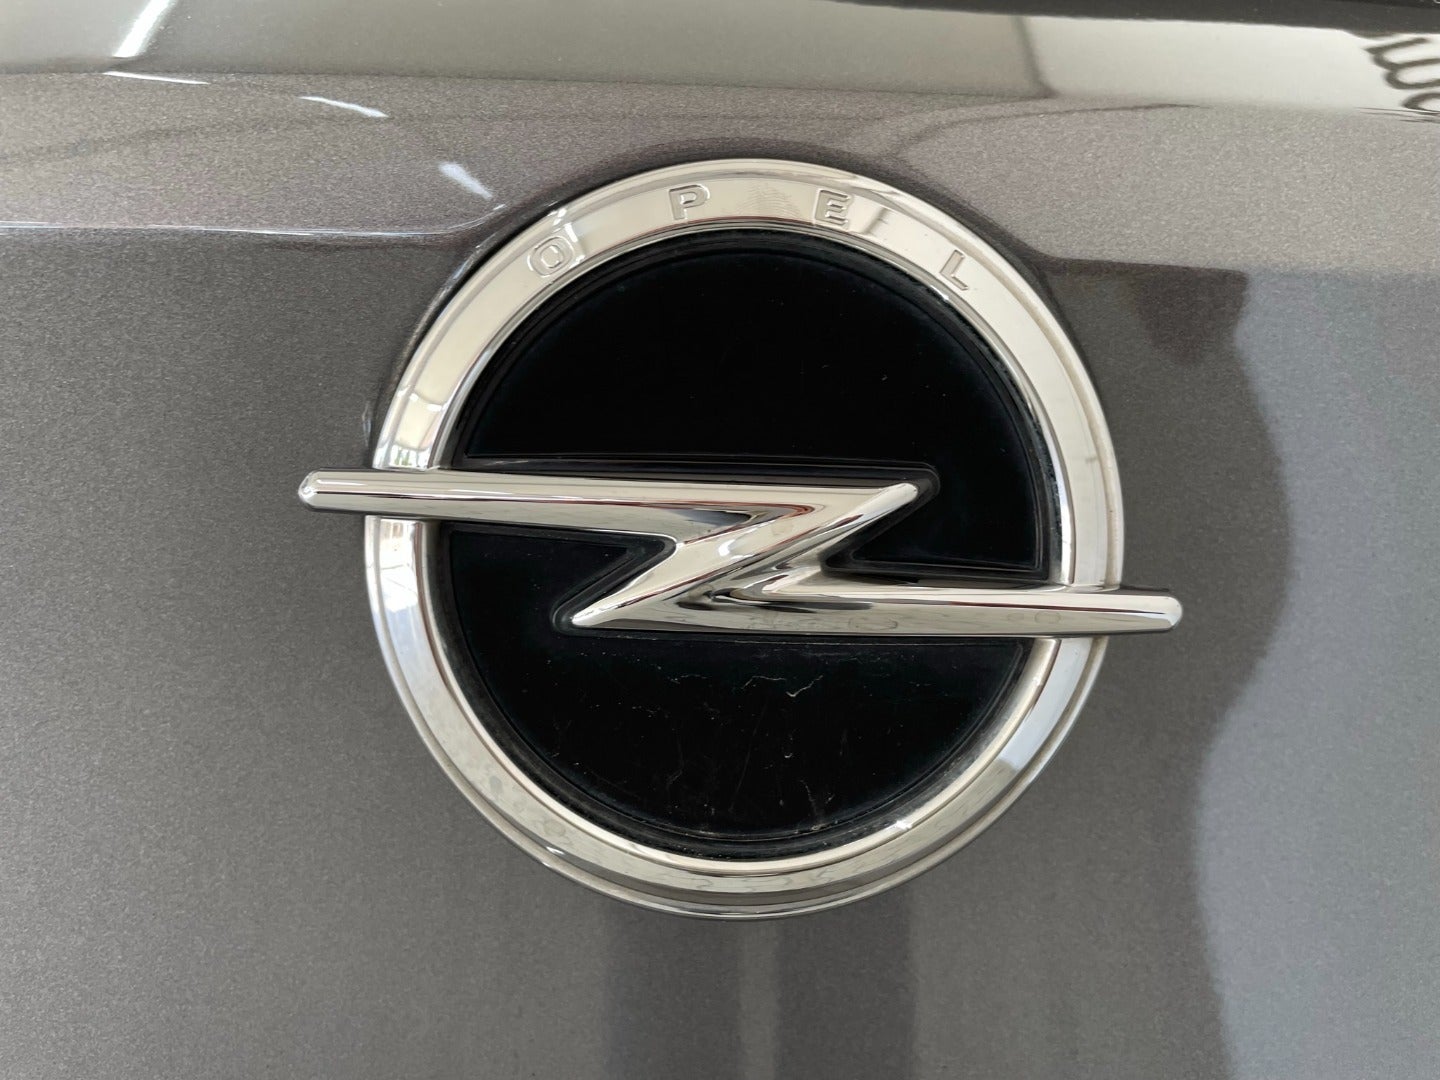 Opel Corsa 2020